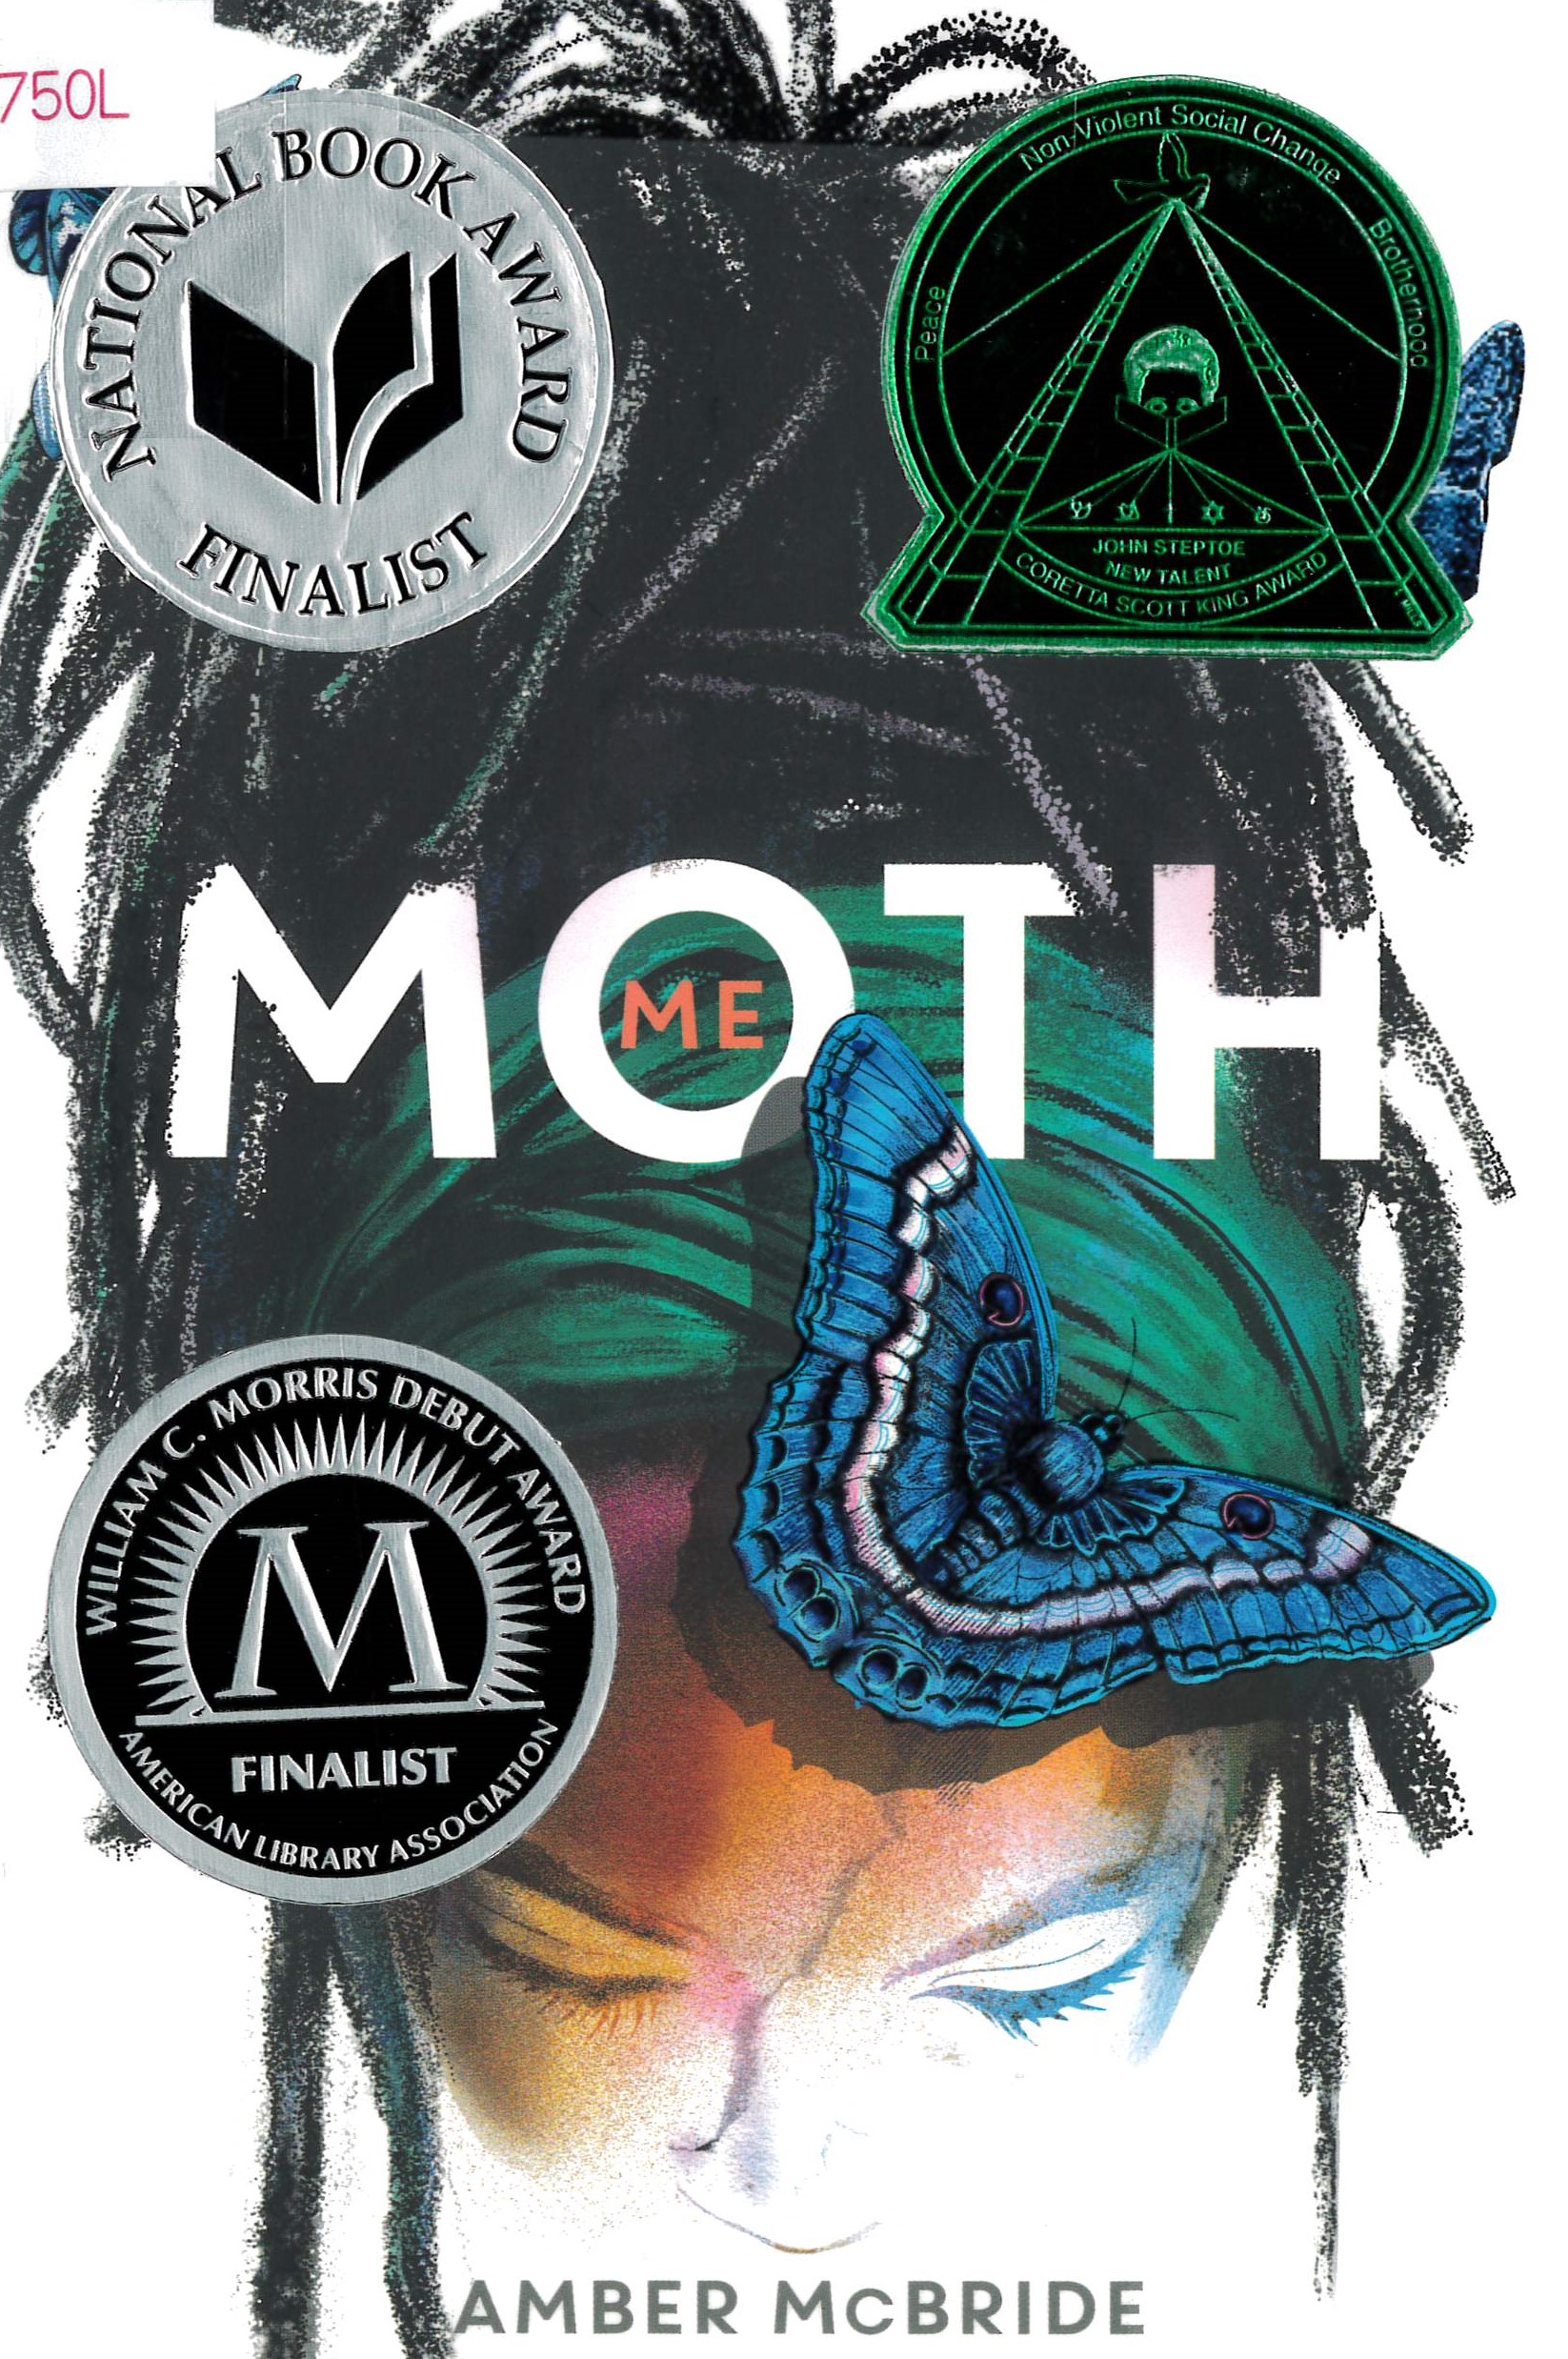 Me (Moth) /